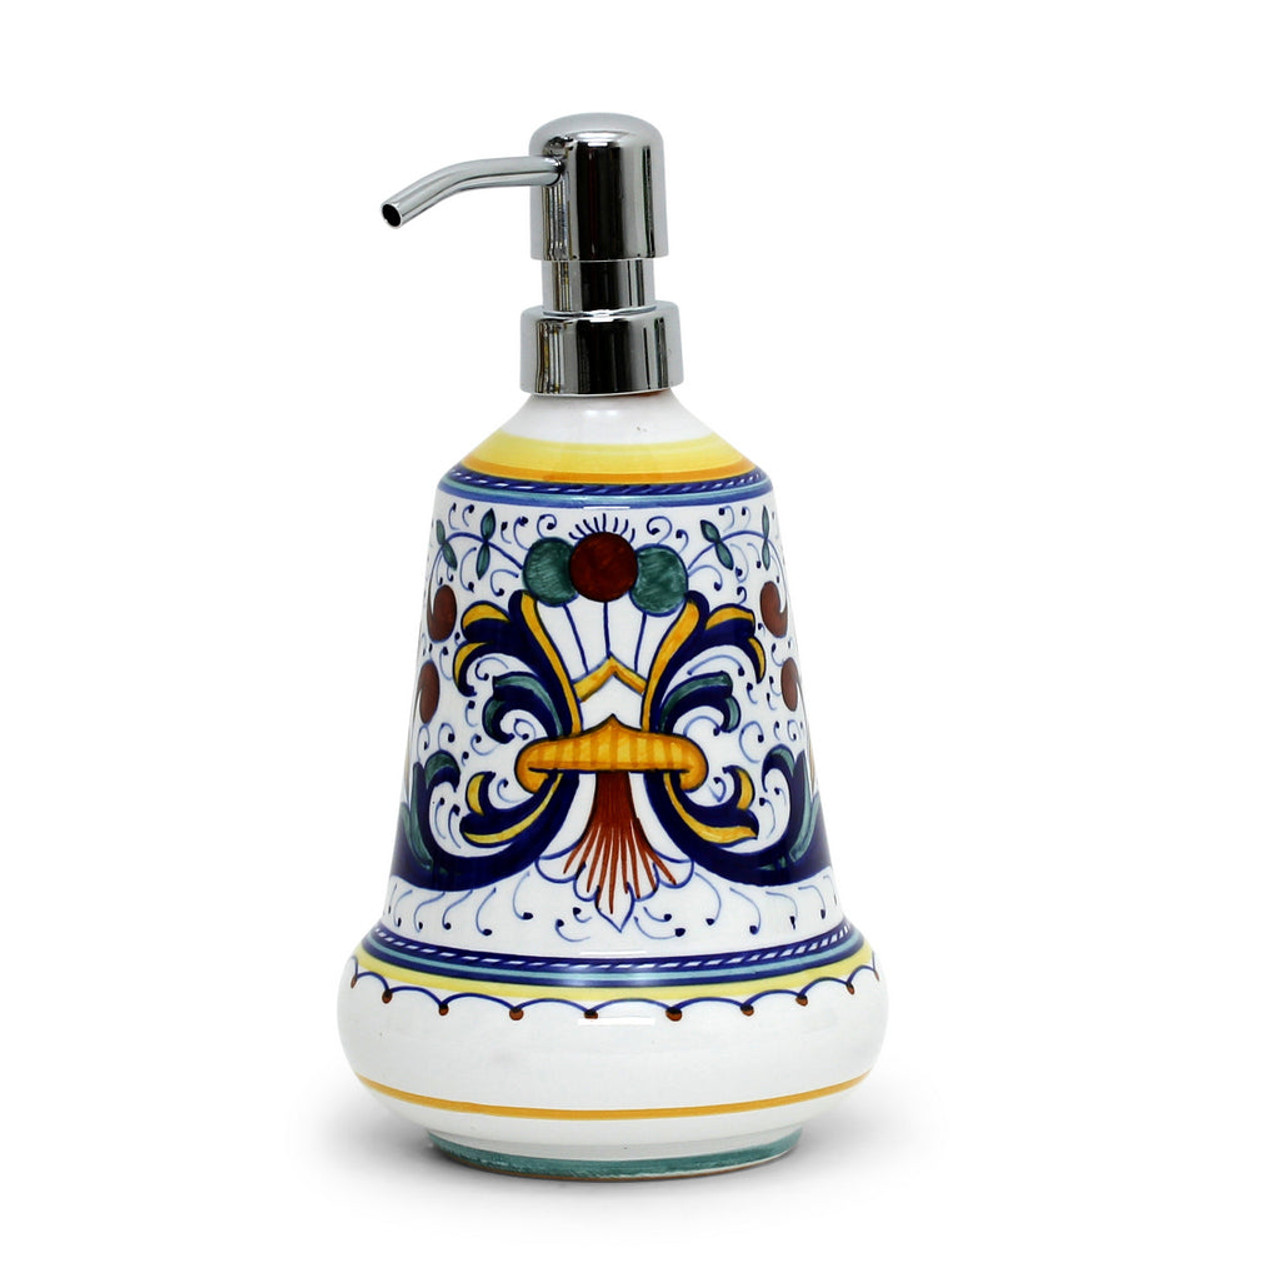 https://cdn11.bigcommerce.com/s-h0473u/images/stencil/1280x1280/products/1345/8514/italian_ceramic_soap_dispenser_ricco__60854.1692561390.jpg?c=2